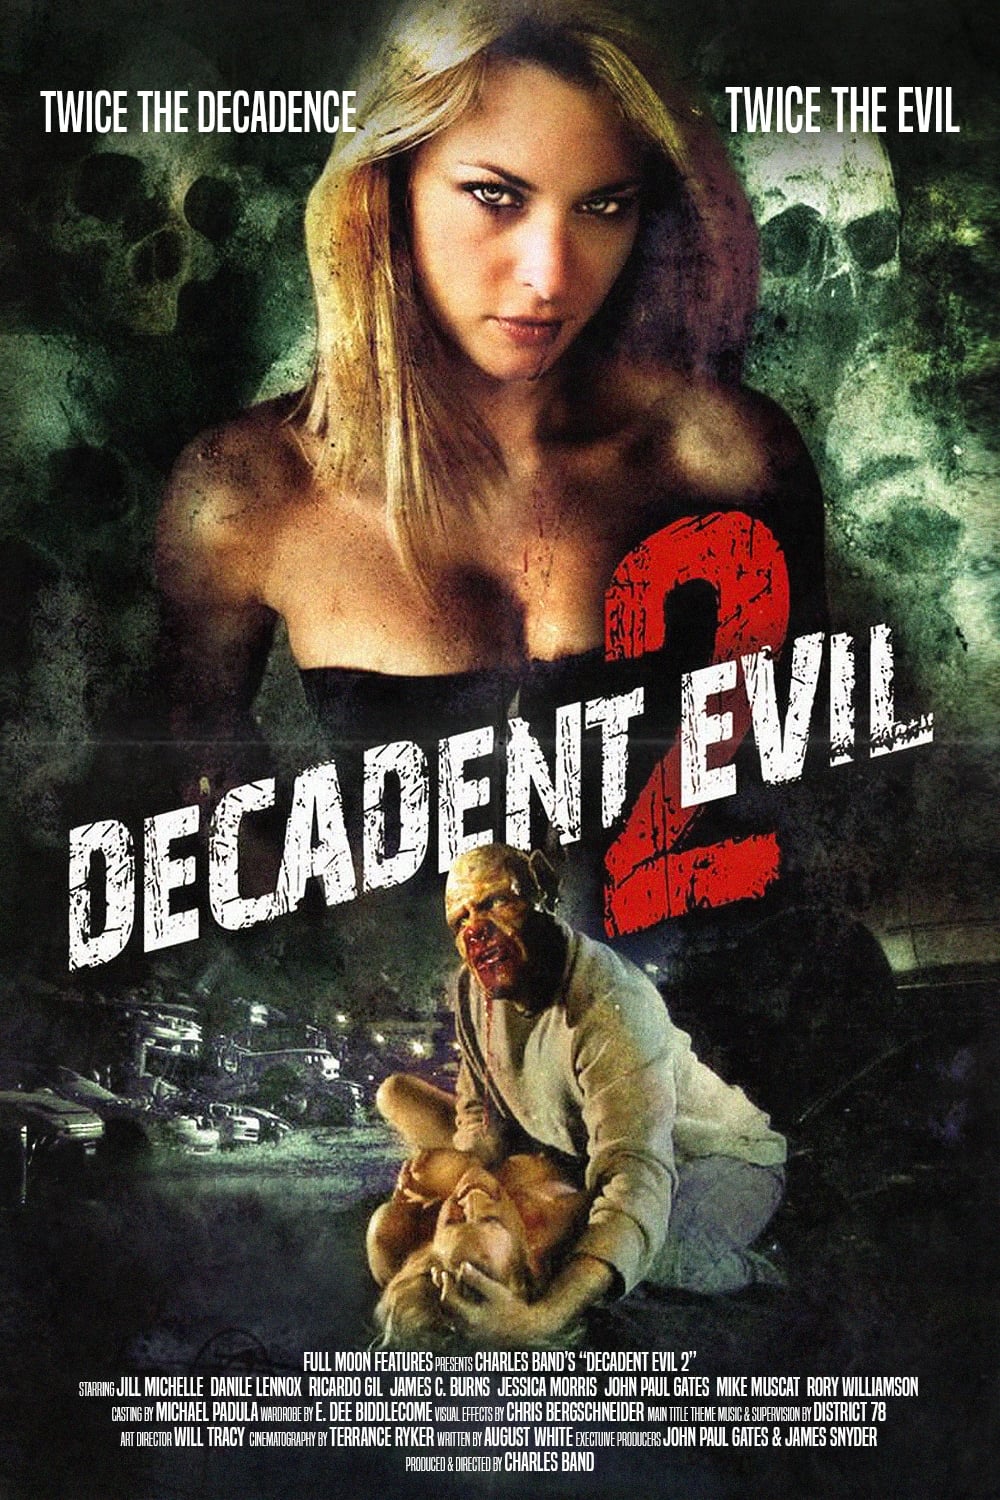 Decadent Evil 2